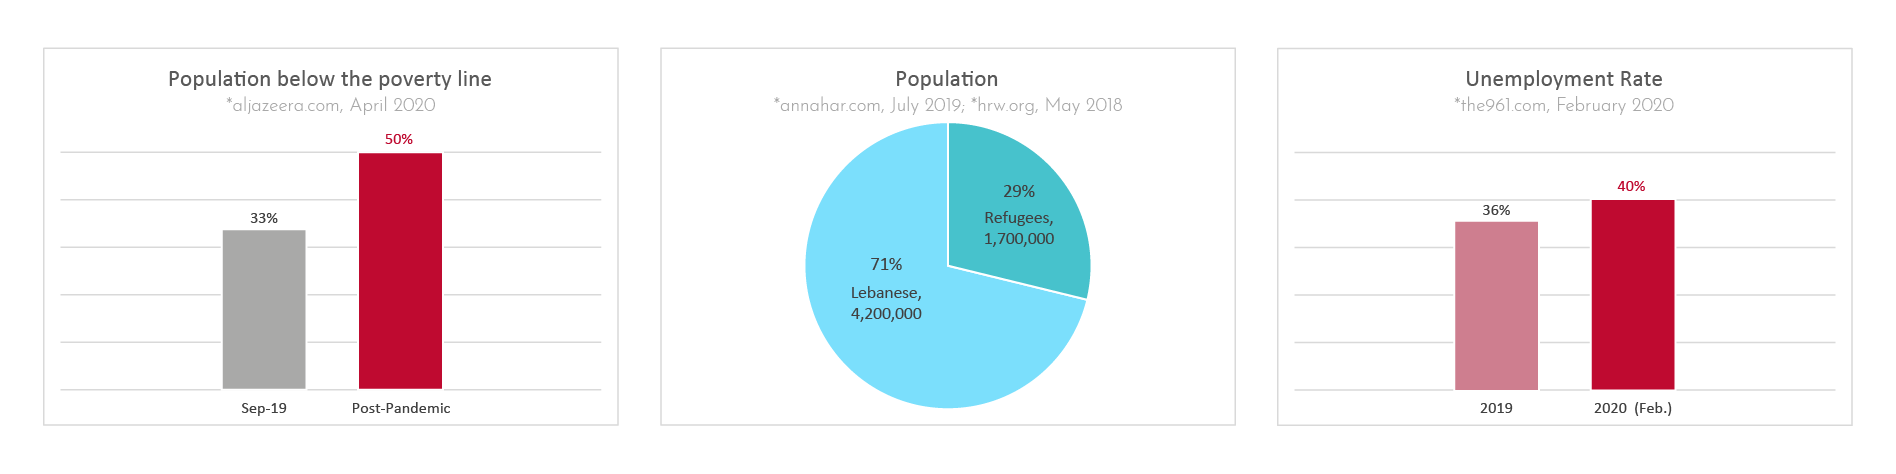 Poverty, Population, Unemployment Statistics - Lebanon